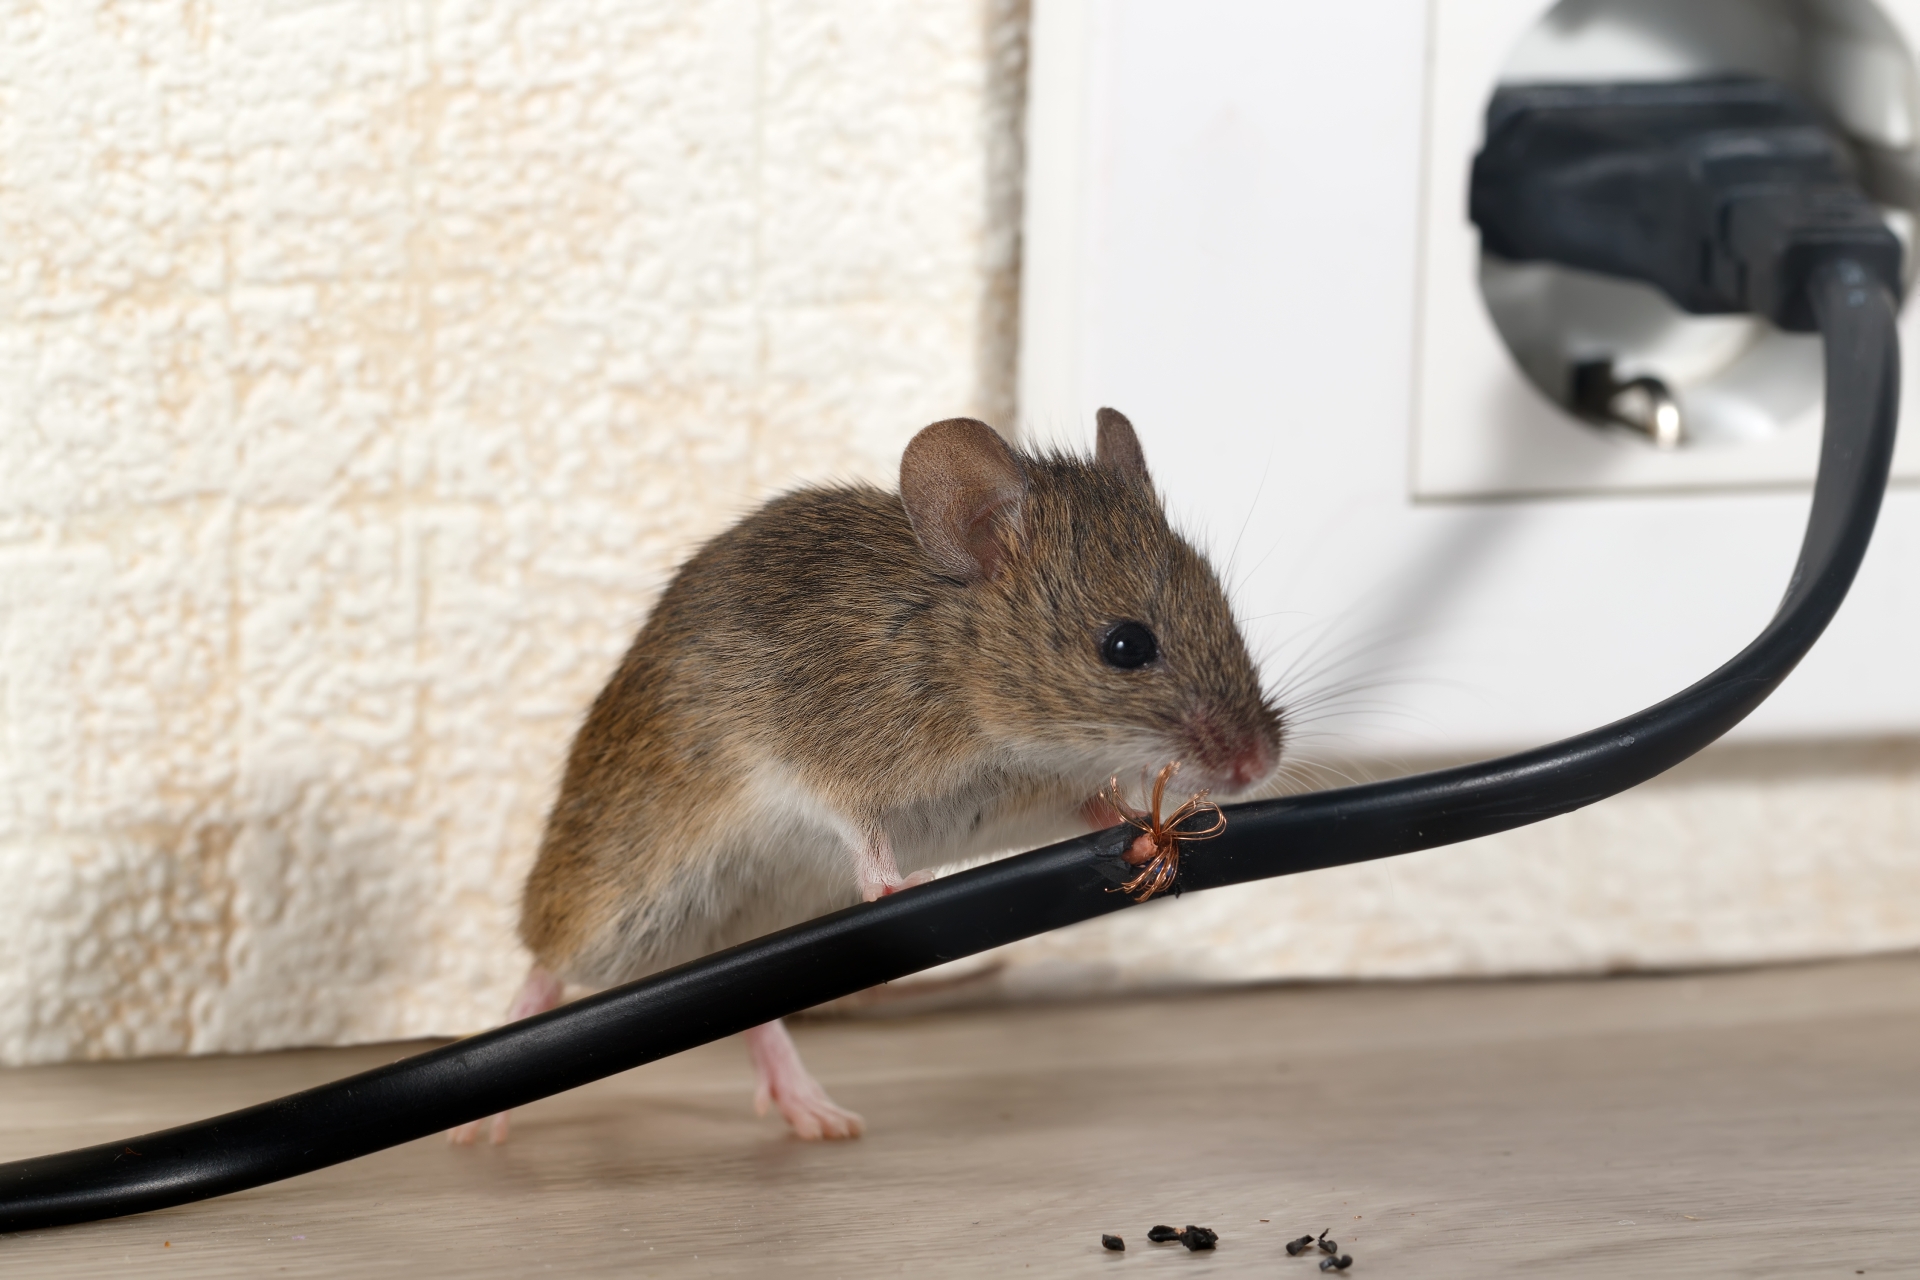 Mice Infestation, Pest Control in Dartford, Crayford, DA1. Call Now 020 8166 9746